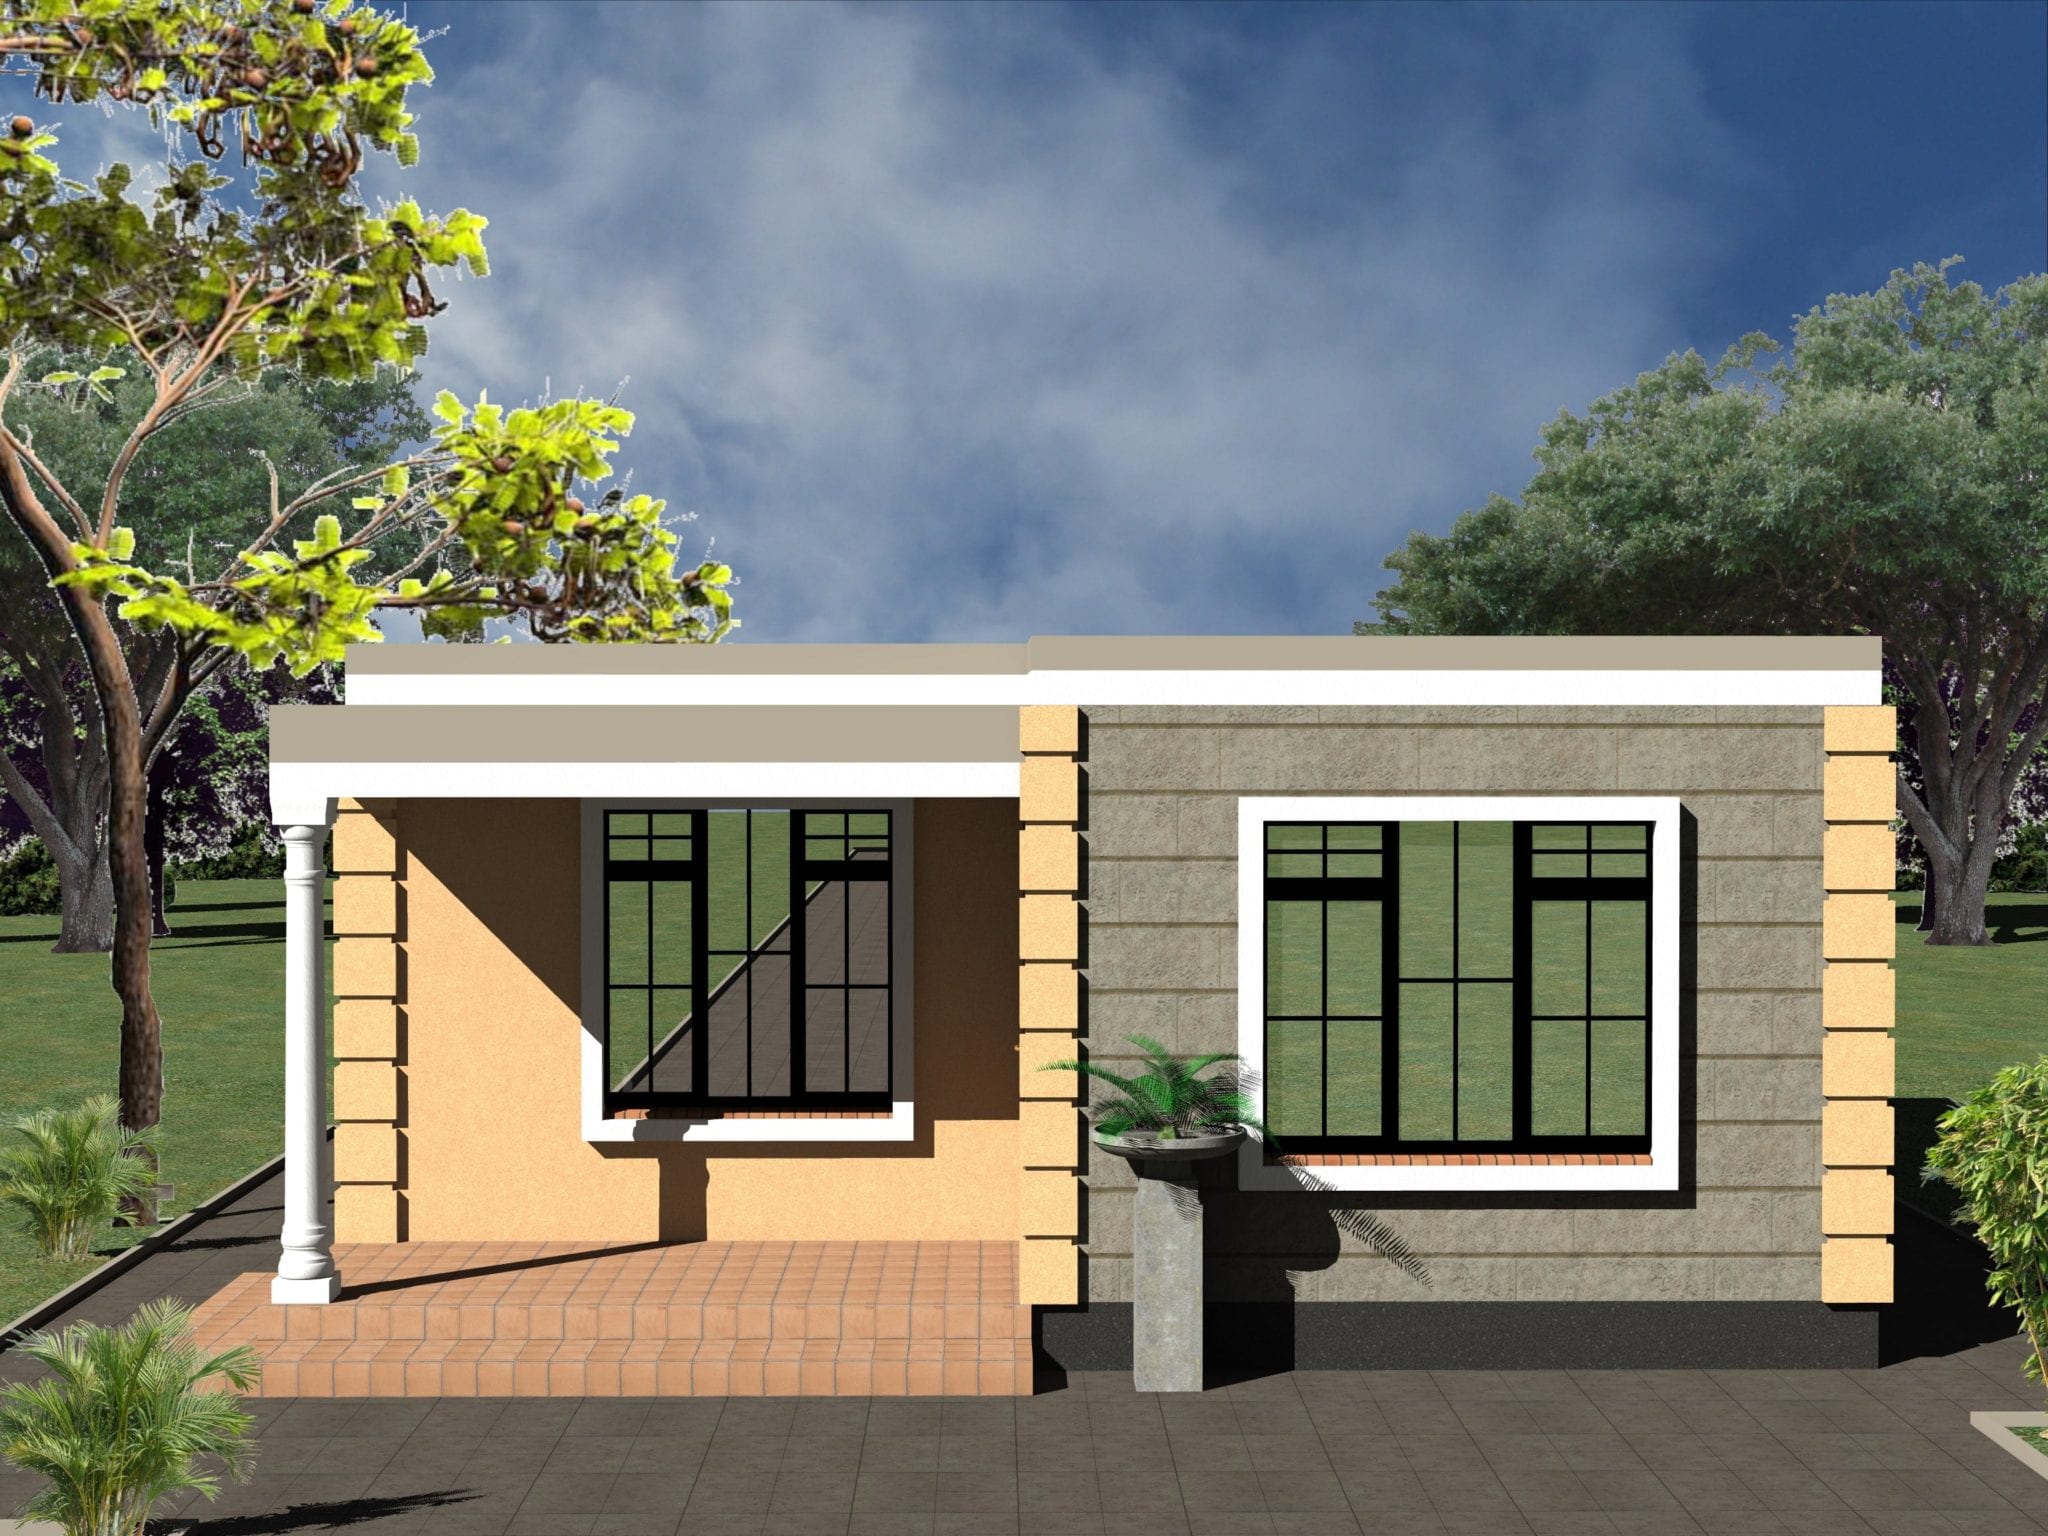 1 Bedroom House Plans pdf Design | HPD Consult